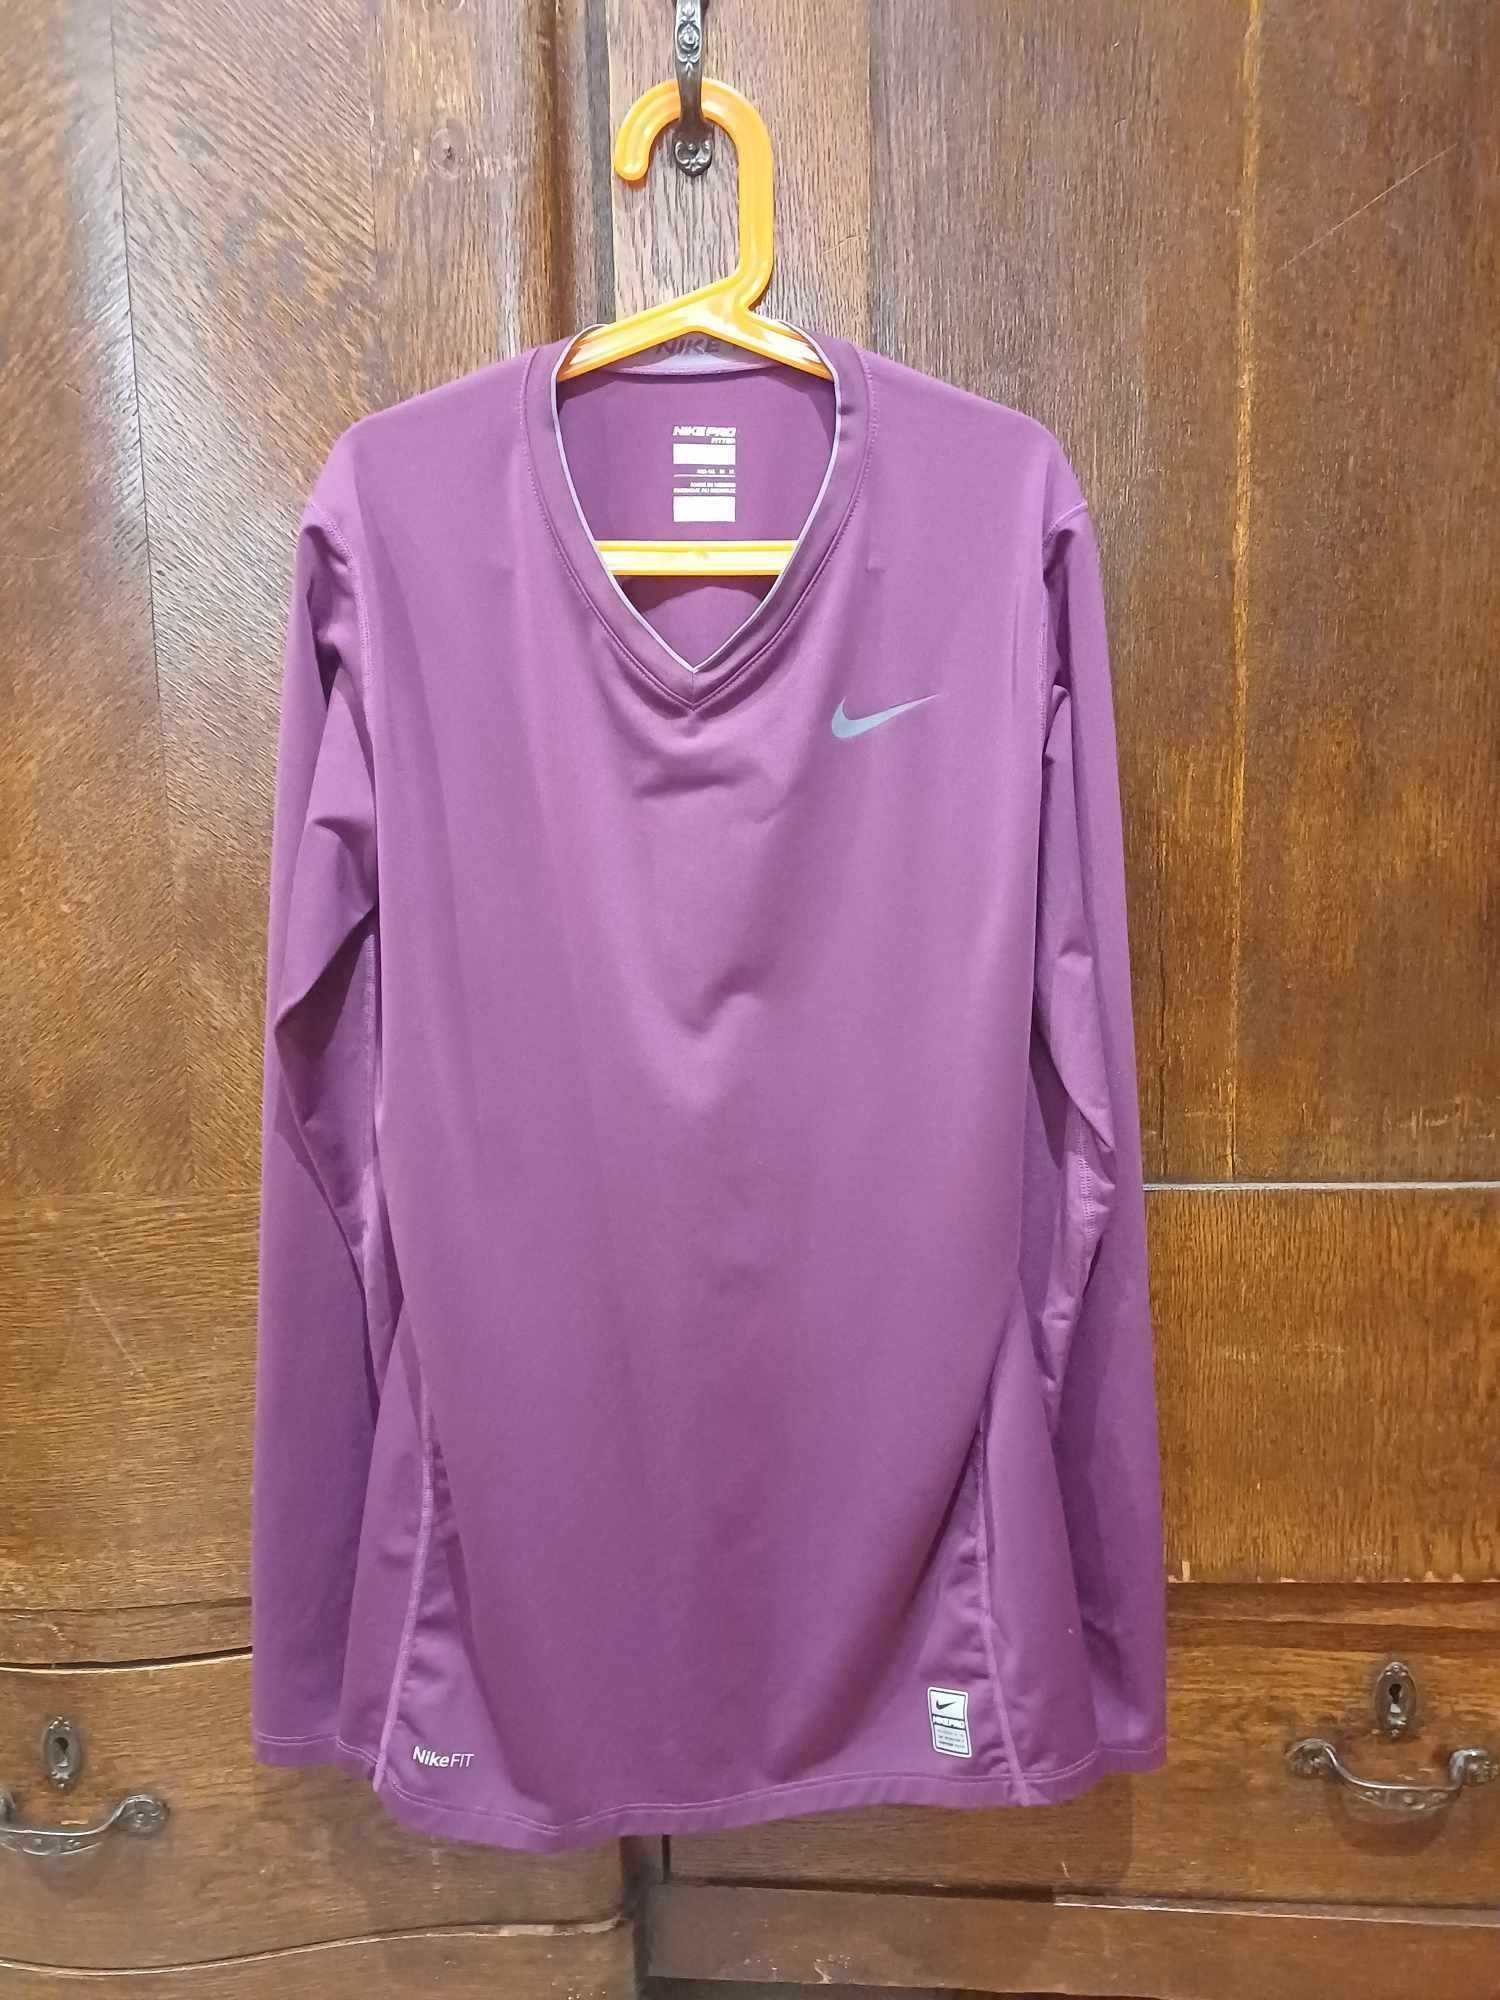 Bluza Nike bordowa - rozmiar M